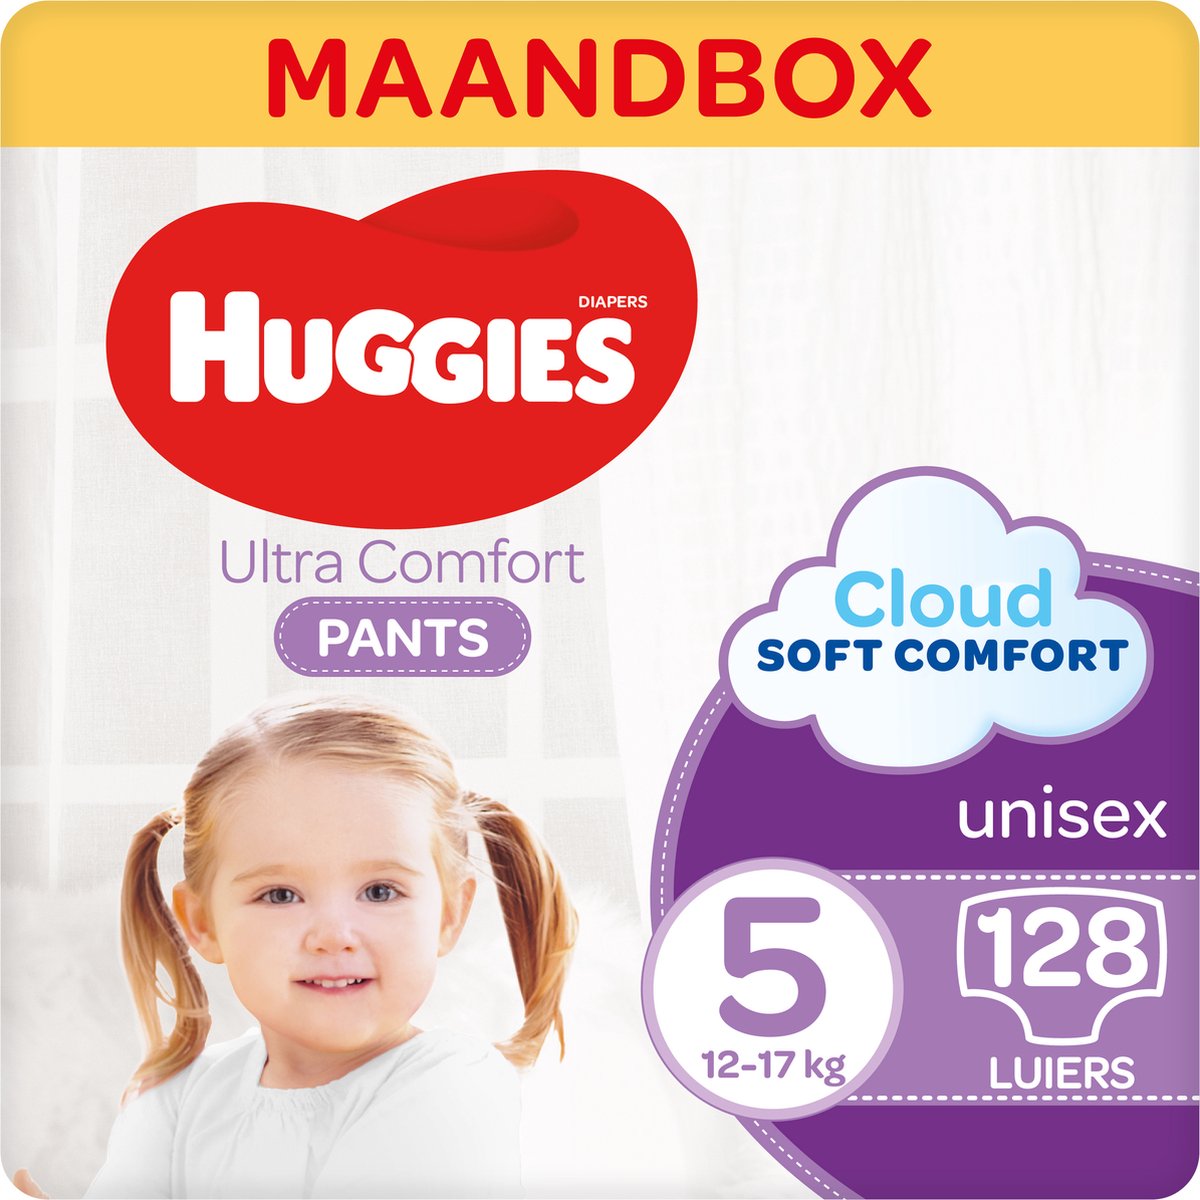 Huggies Luierbroekjes - maat 5 (12 tot 17 kg) - Ultra Comfort - unisex - 128 stuks - Maandbox - Huggies